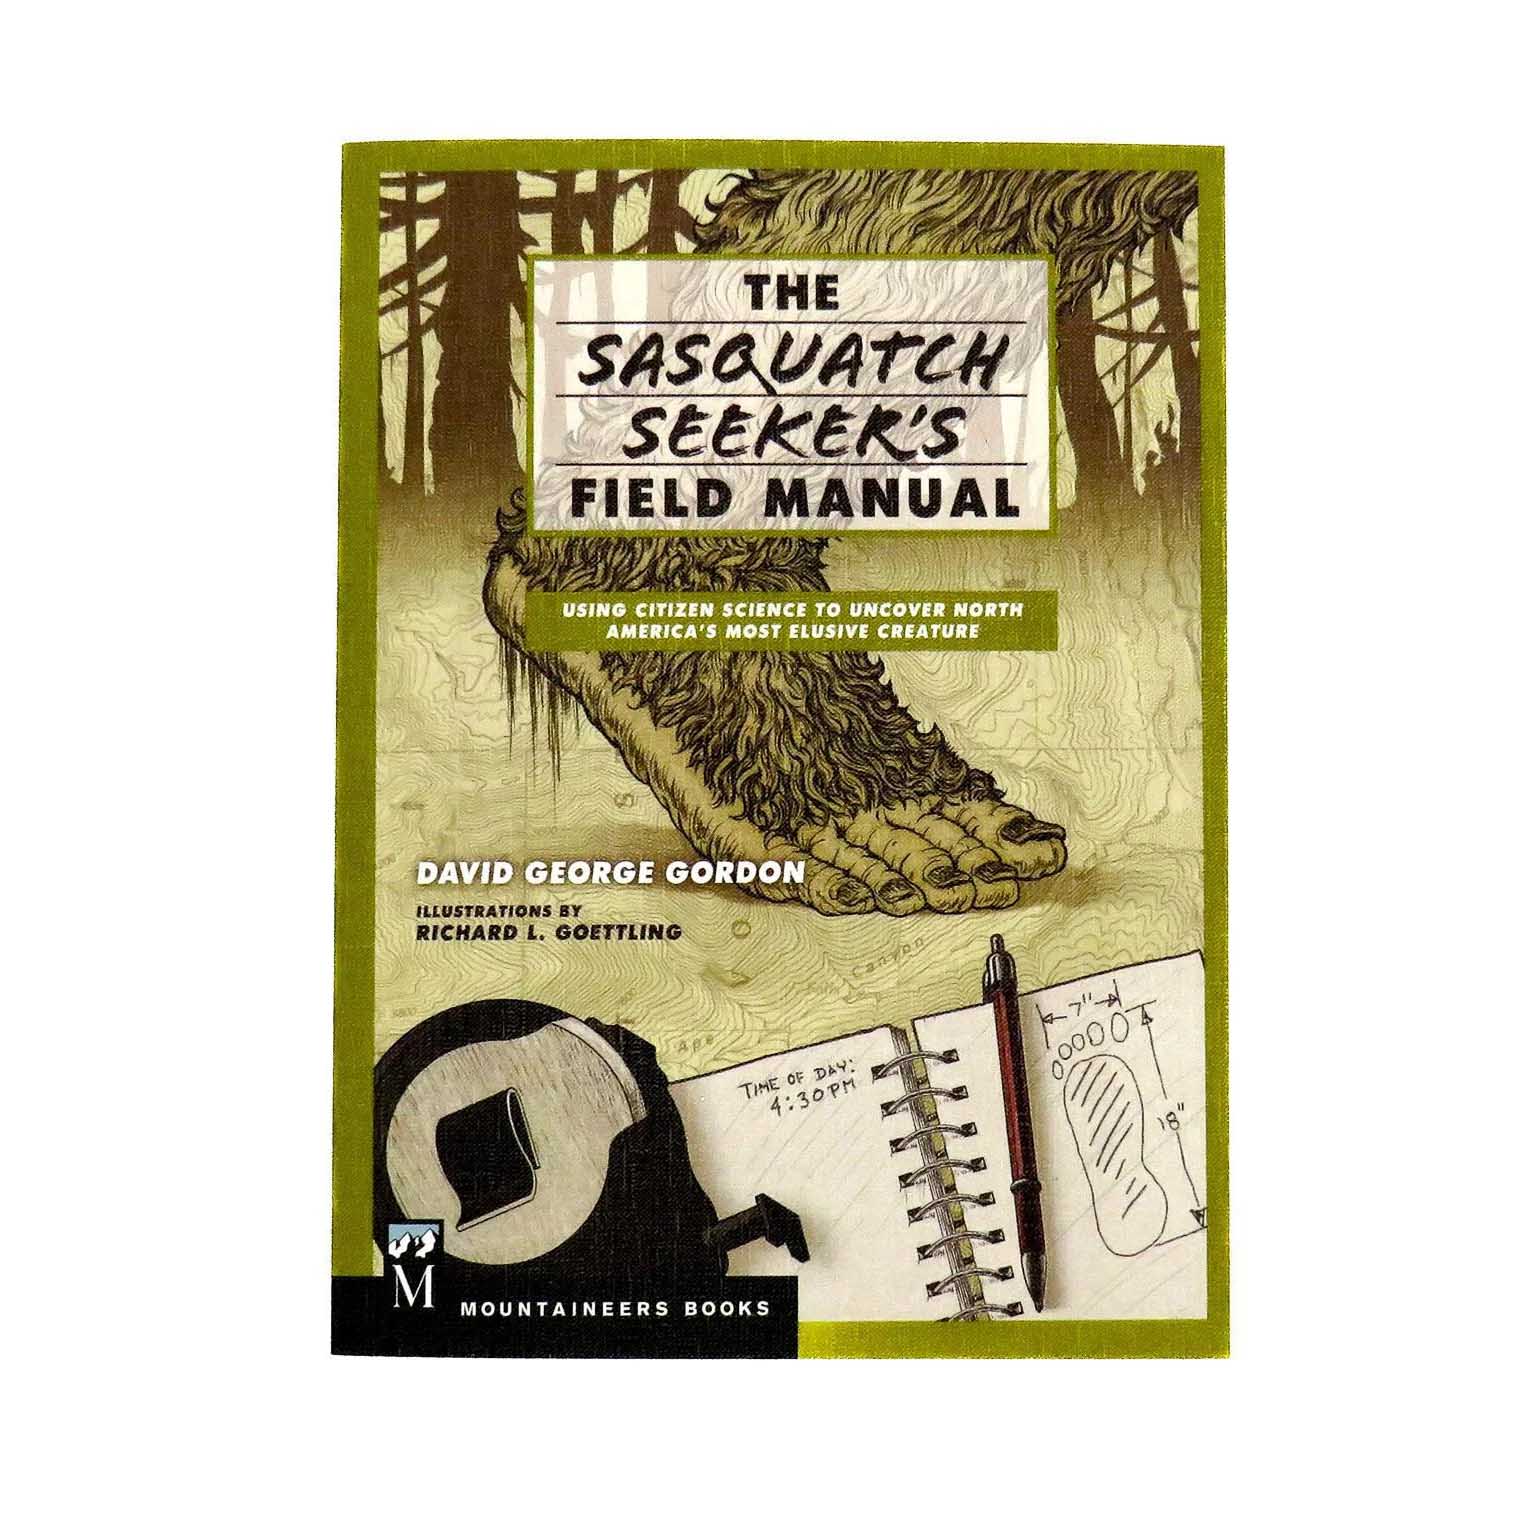 The Sasquatch Seeker's field manual.